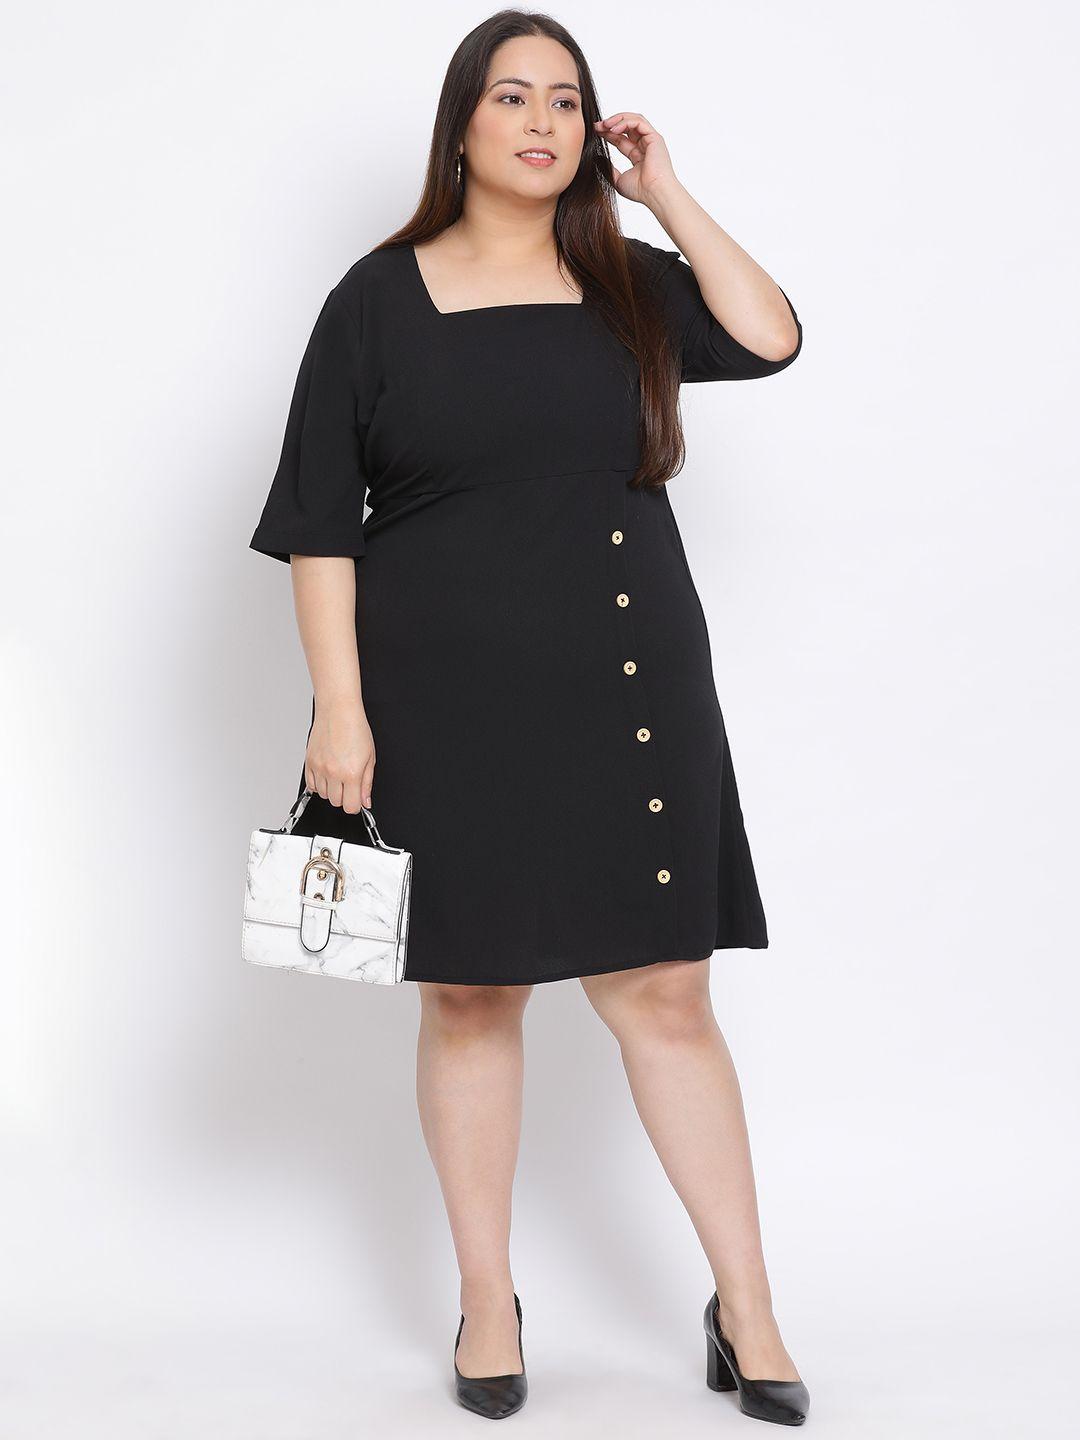 oxolloxo women plus size black solid a-line dress